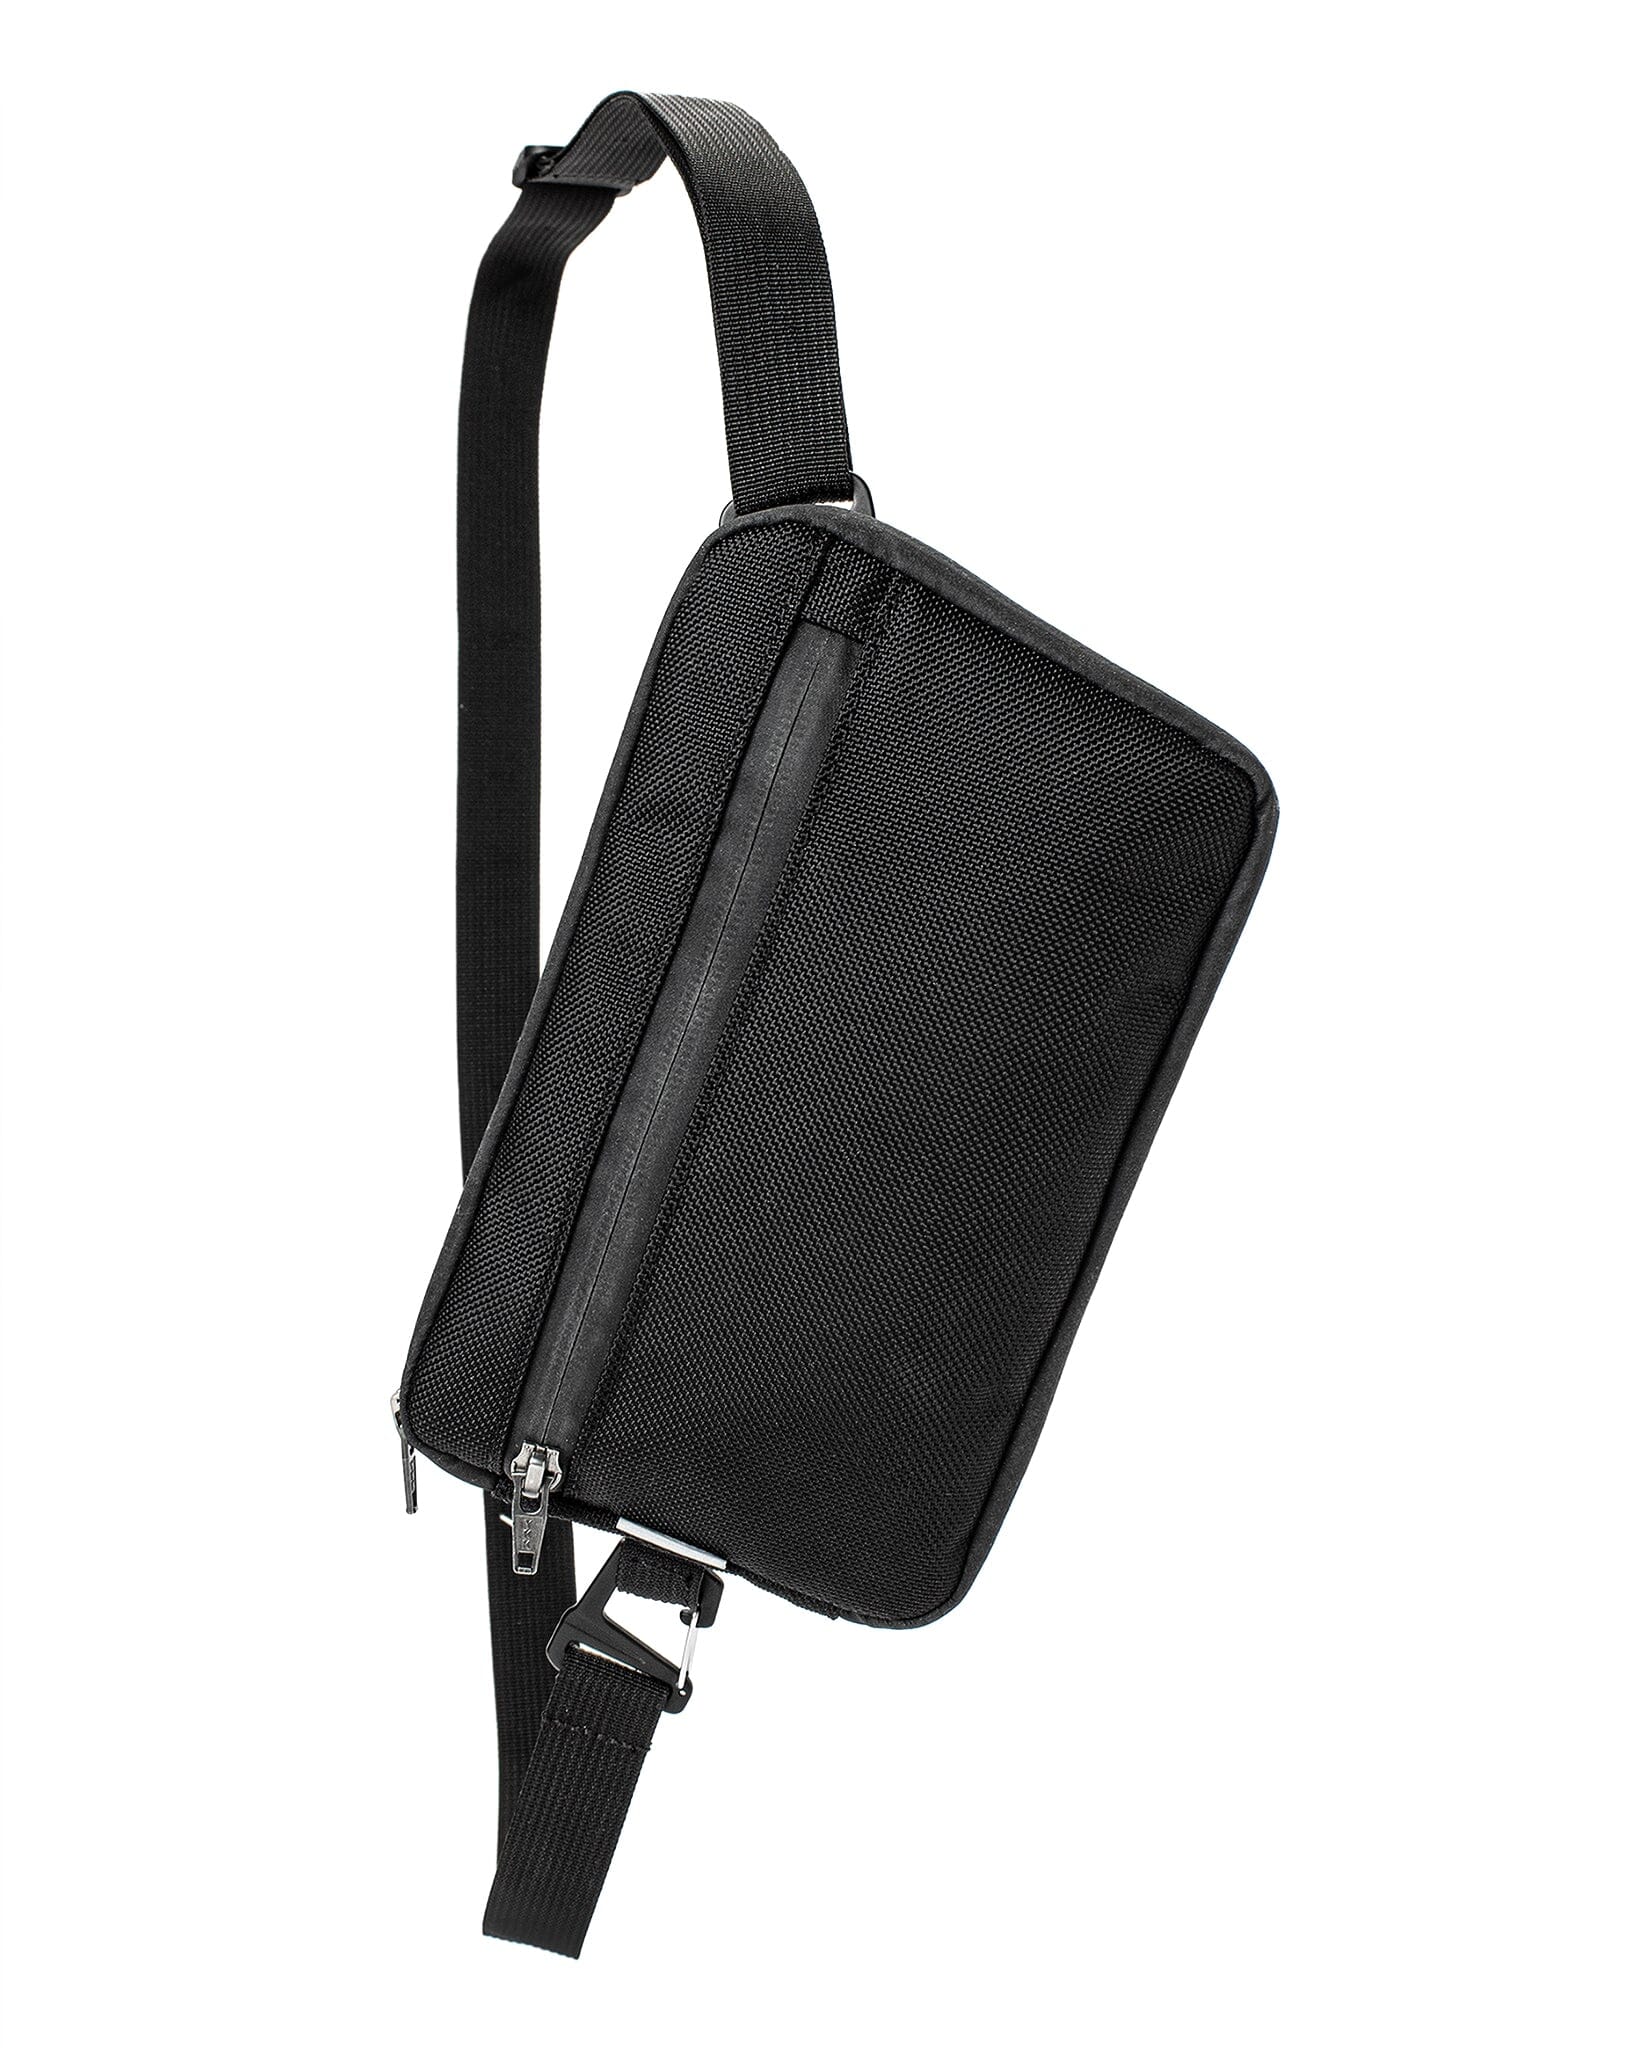 AUX™ Pocket - Stealth Ballistic Bag bolstr   